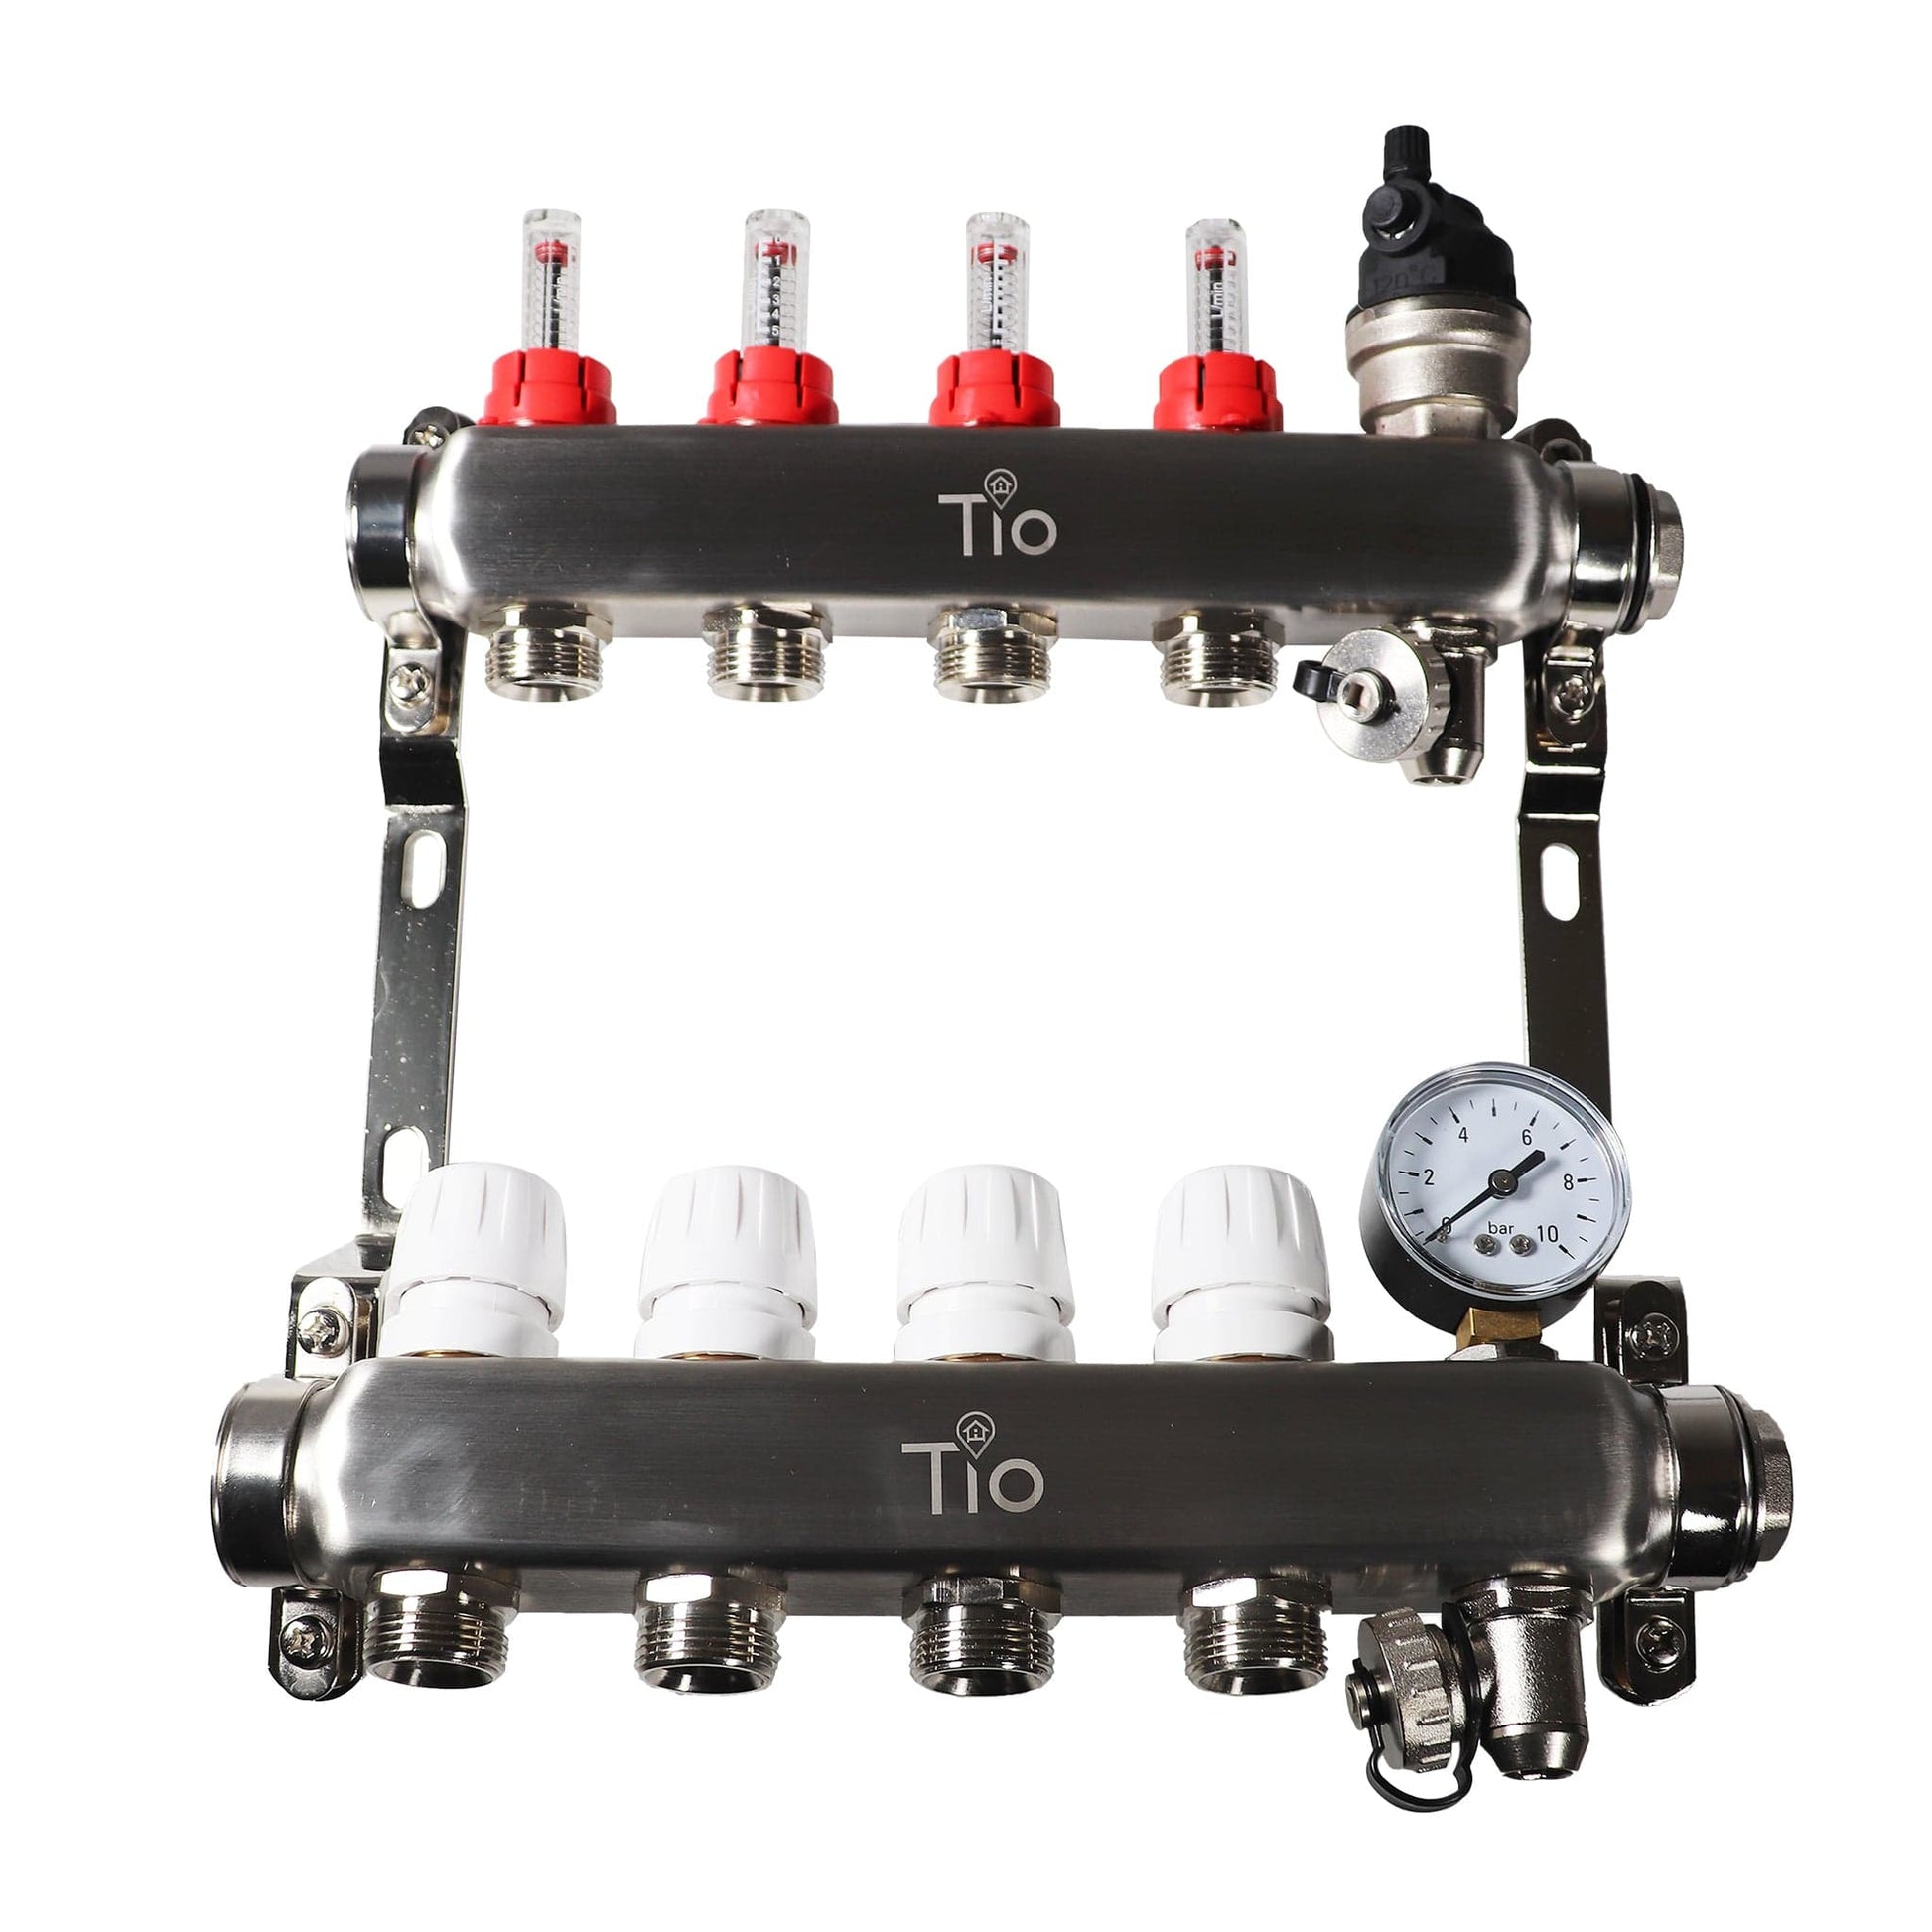 Tio 4 Port Manifold With Pressure Gauge & Auto Air Vent | TIOMAN0004 BM01775